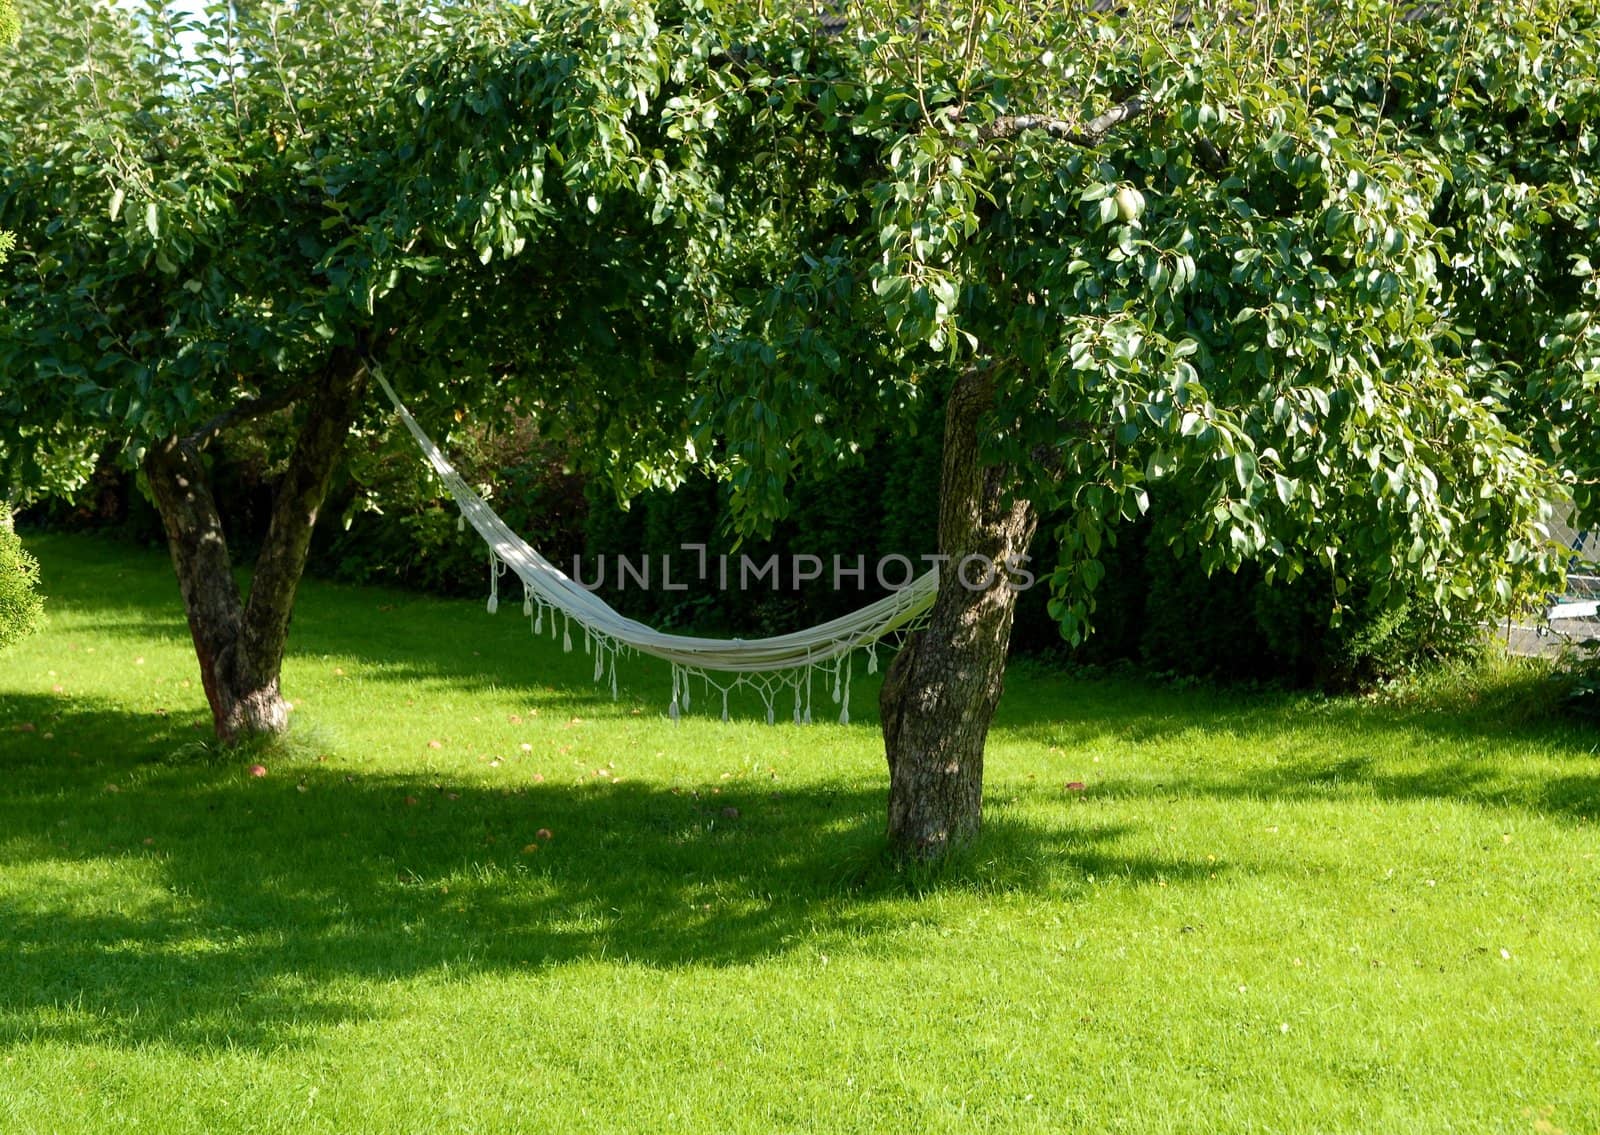 hammock in the garden. Please note: No negative use allowed.